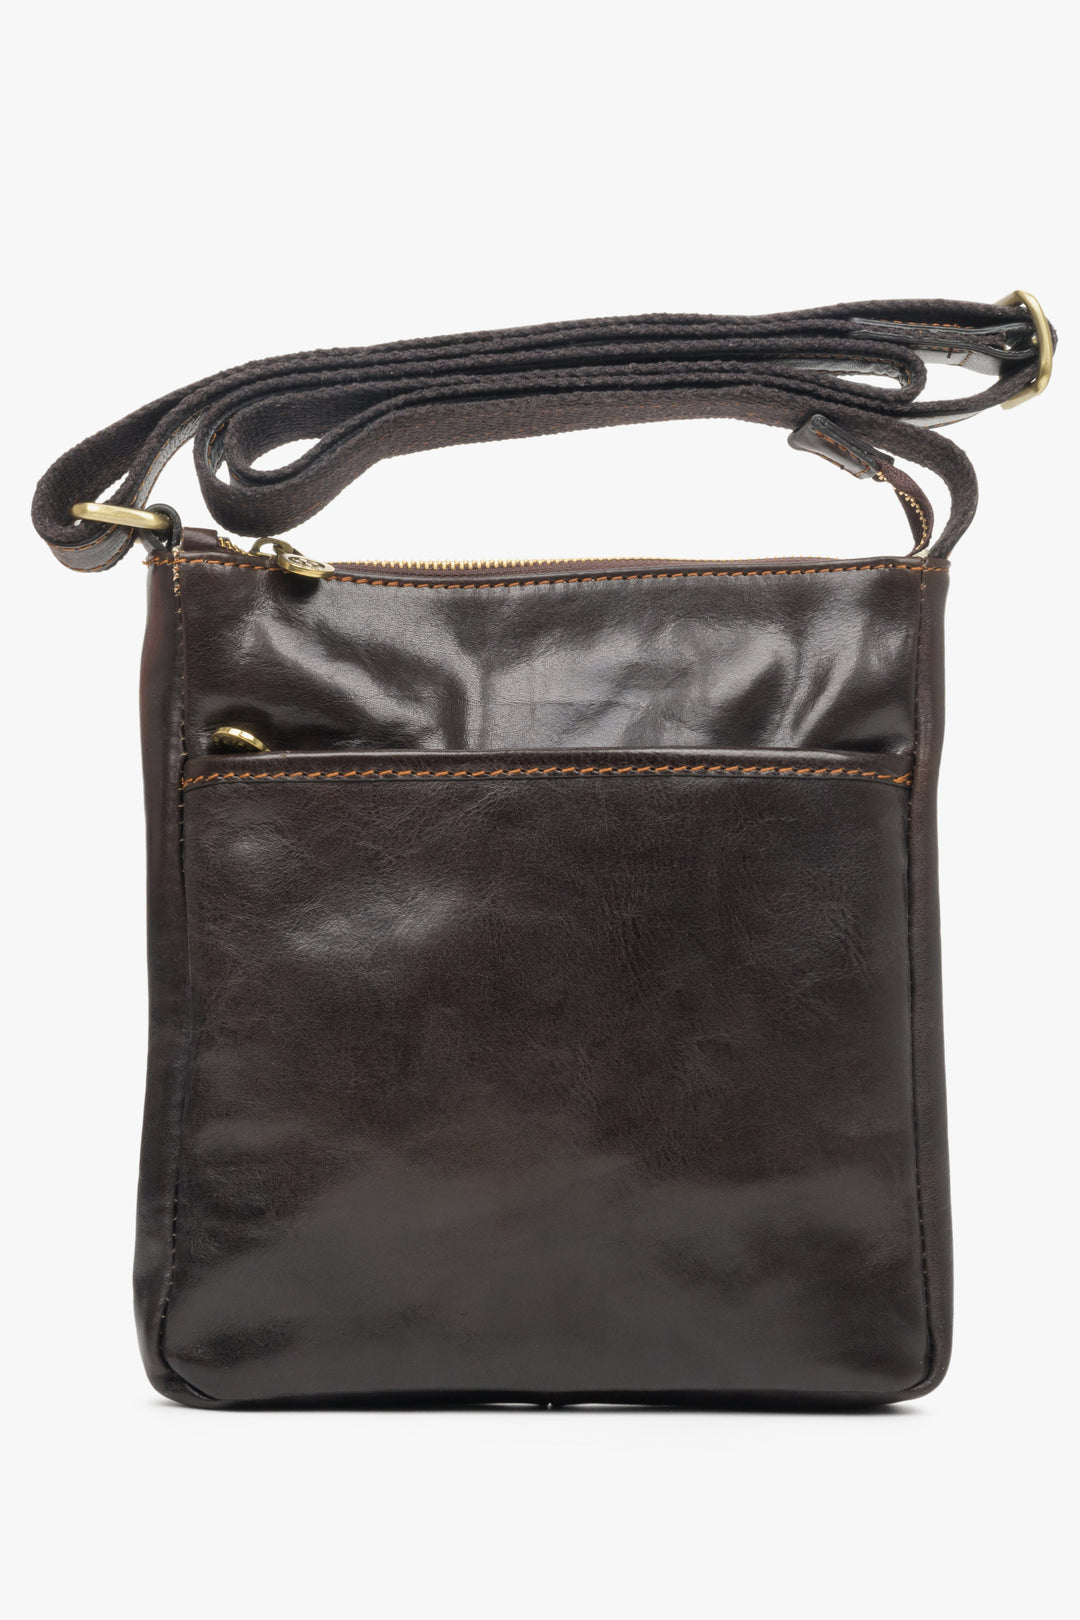 Men's small dark brown shoulder bag, perfect for fall by Estro.